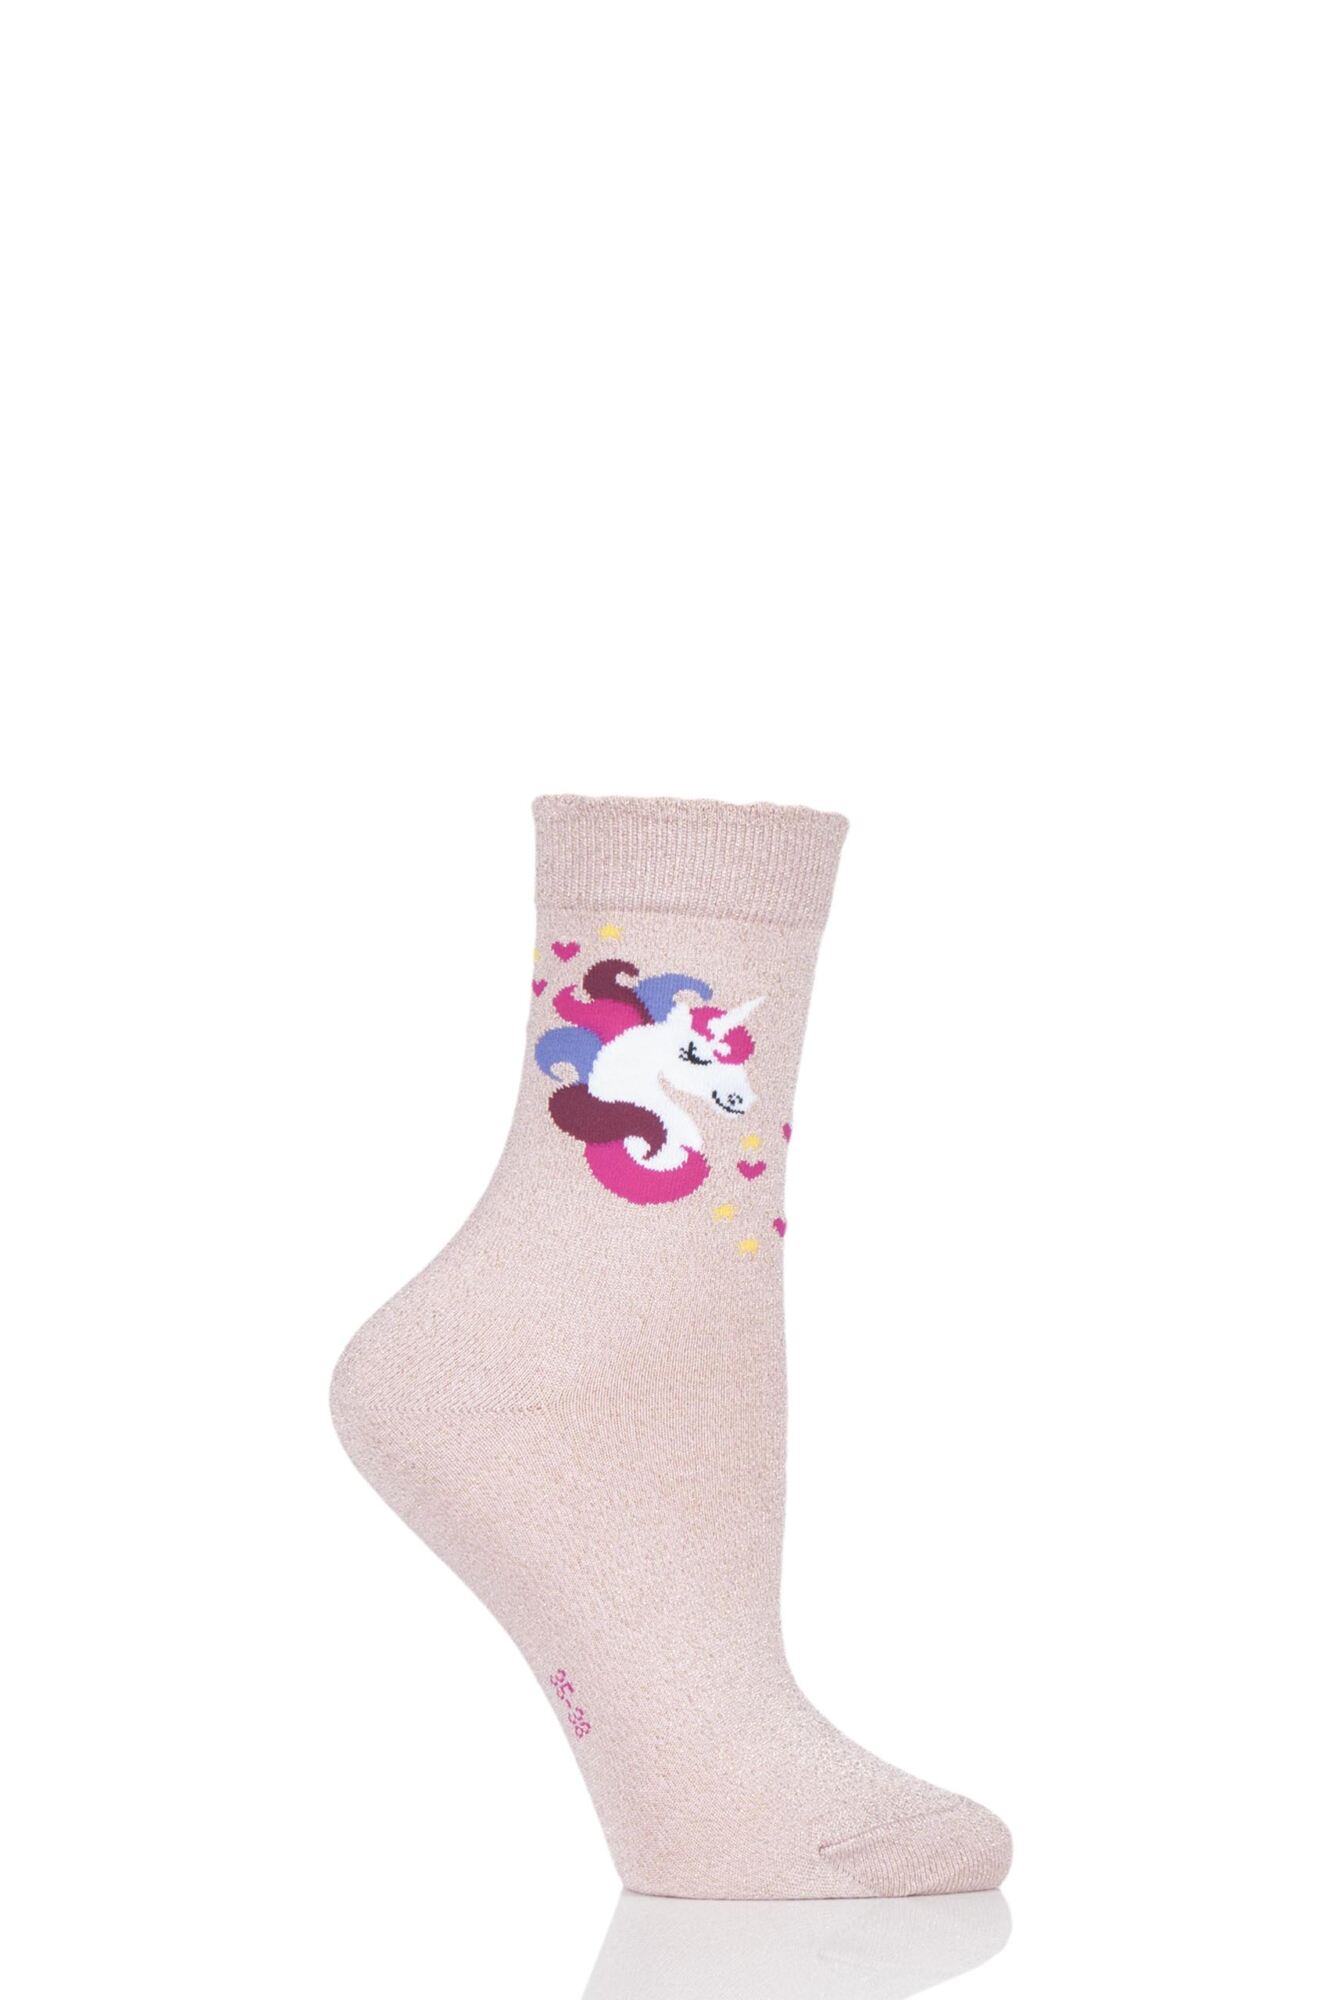  Girls 1 Pair Falke Unicorn Socks